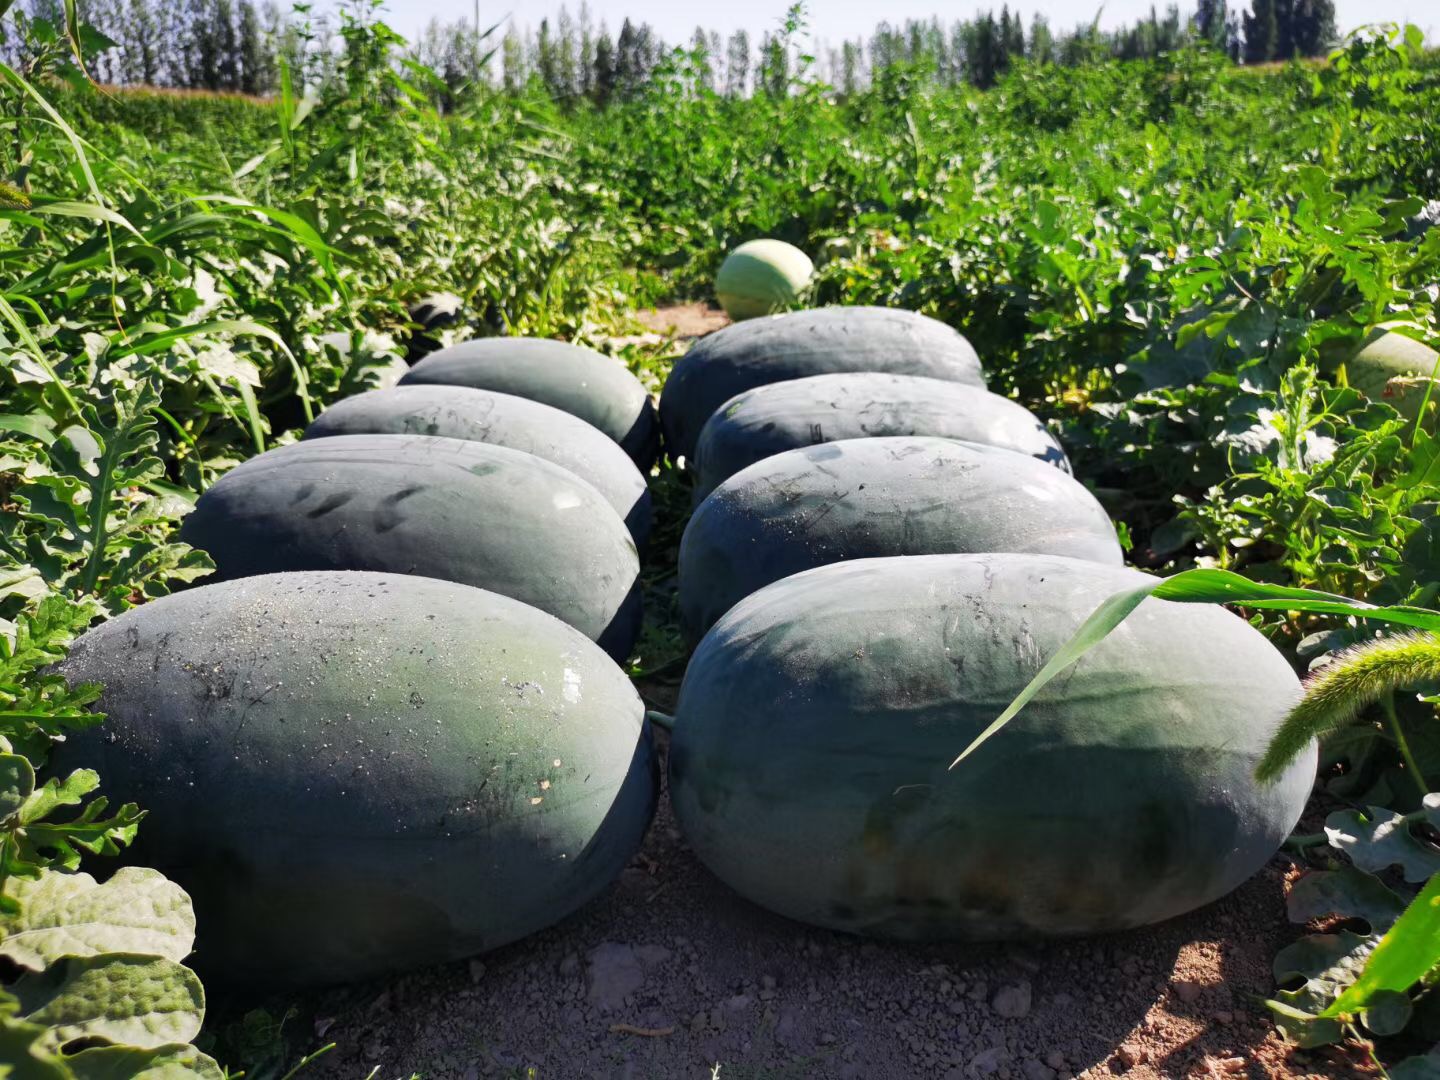 Suntoday oblong black big size  watermelon seeds(11040)